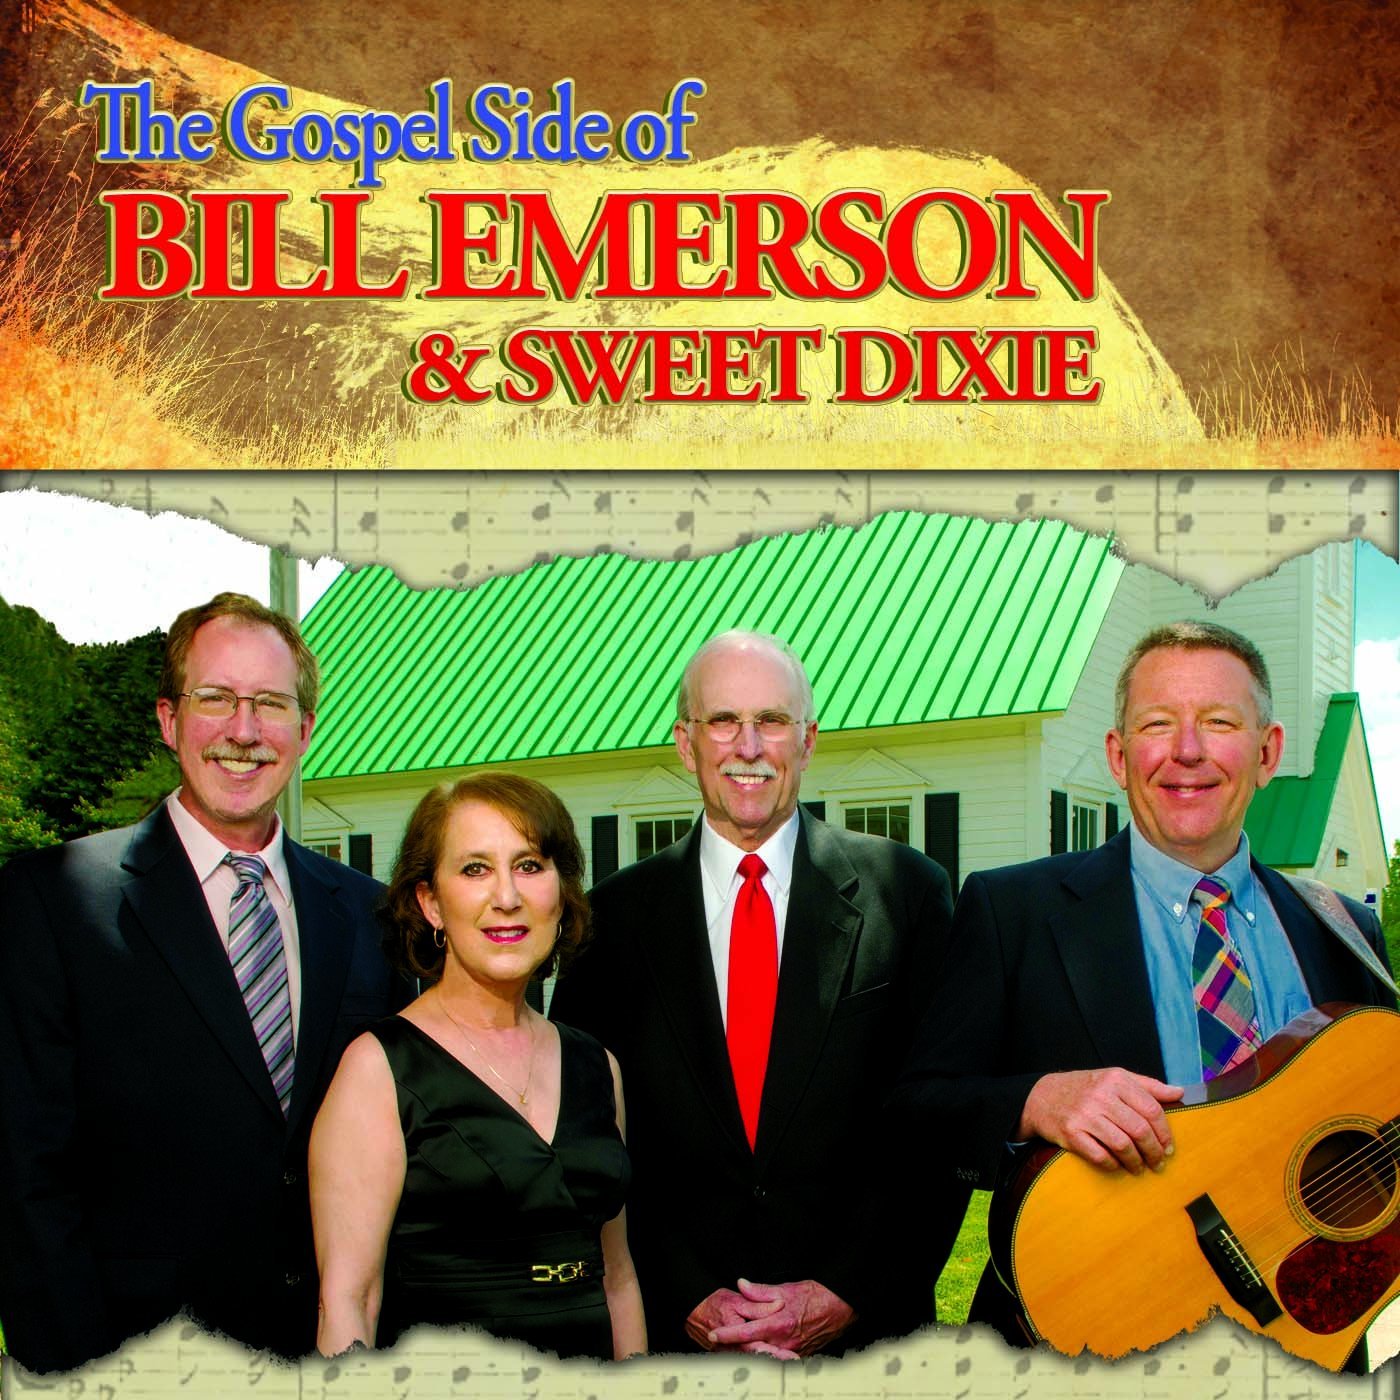 The Gospel Side of Bill Emerson & Sweet Dixie